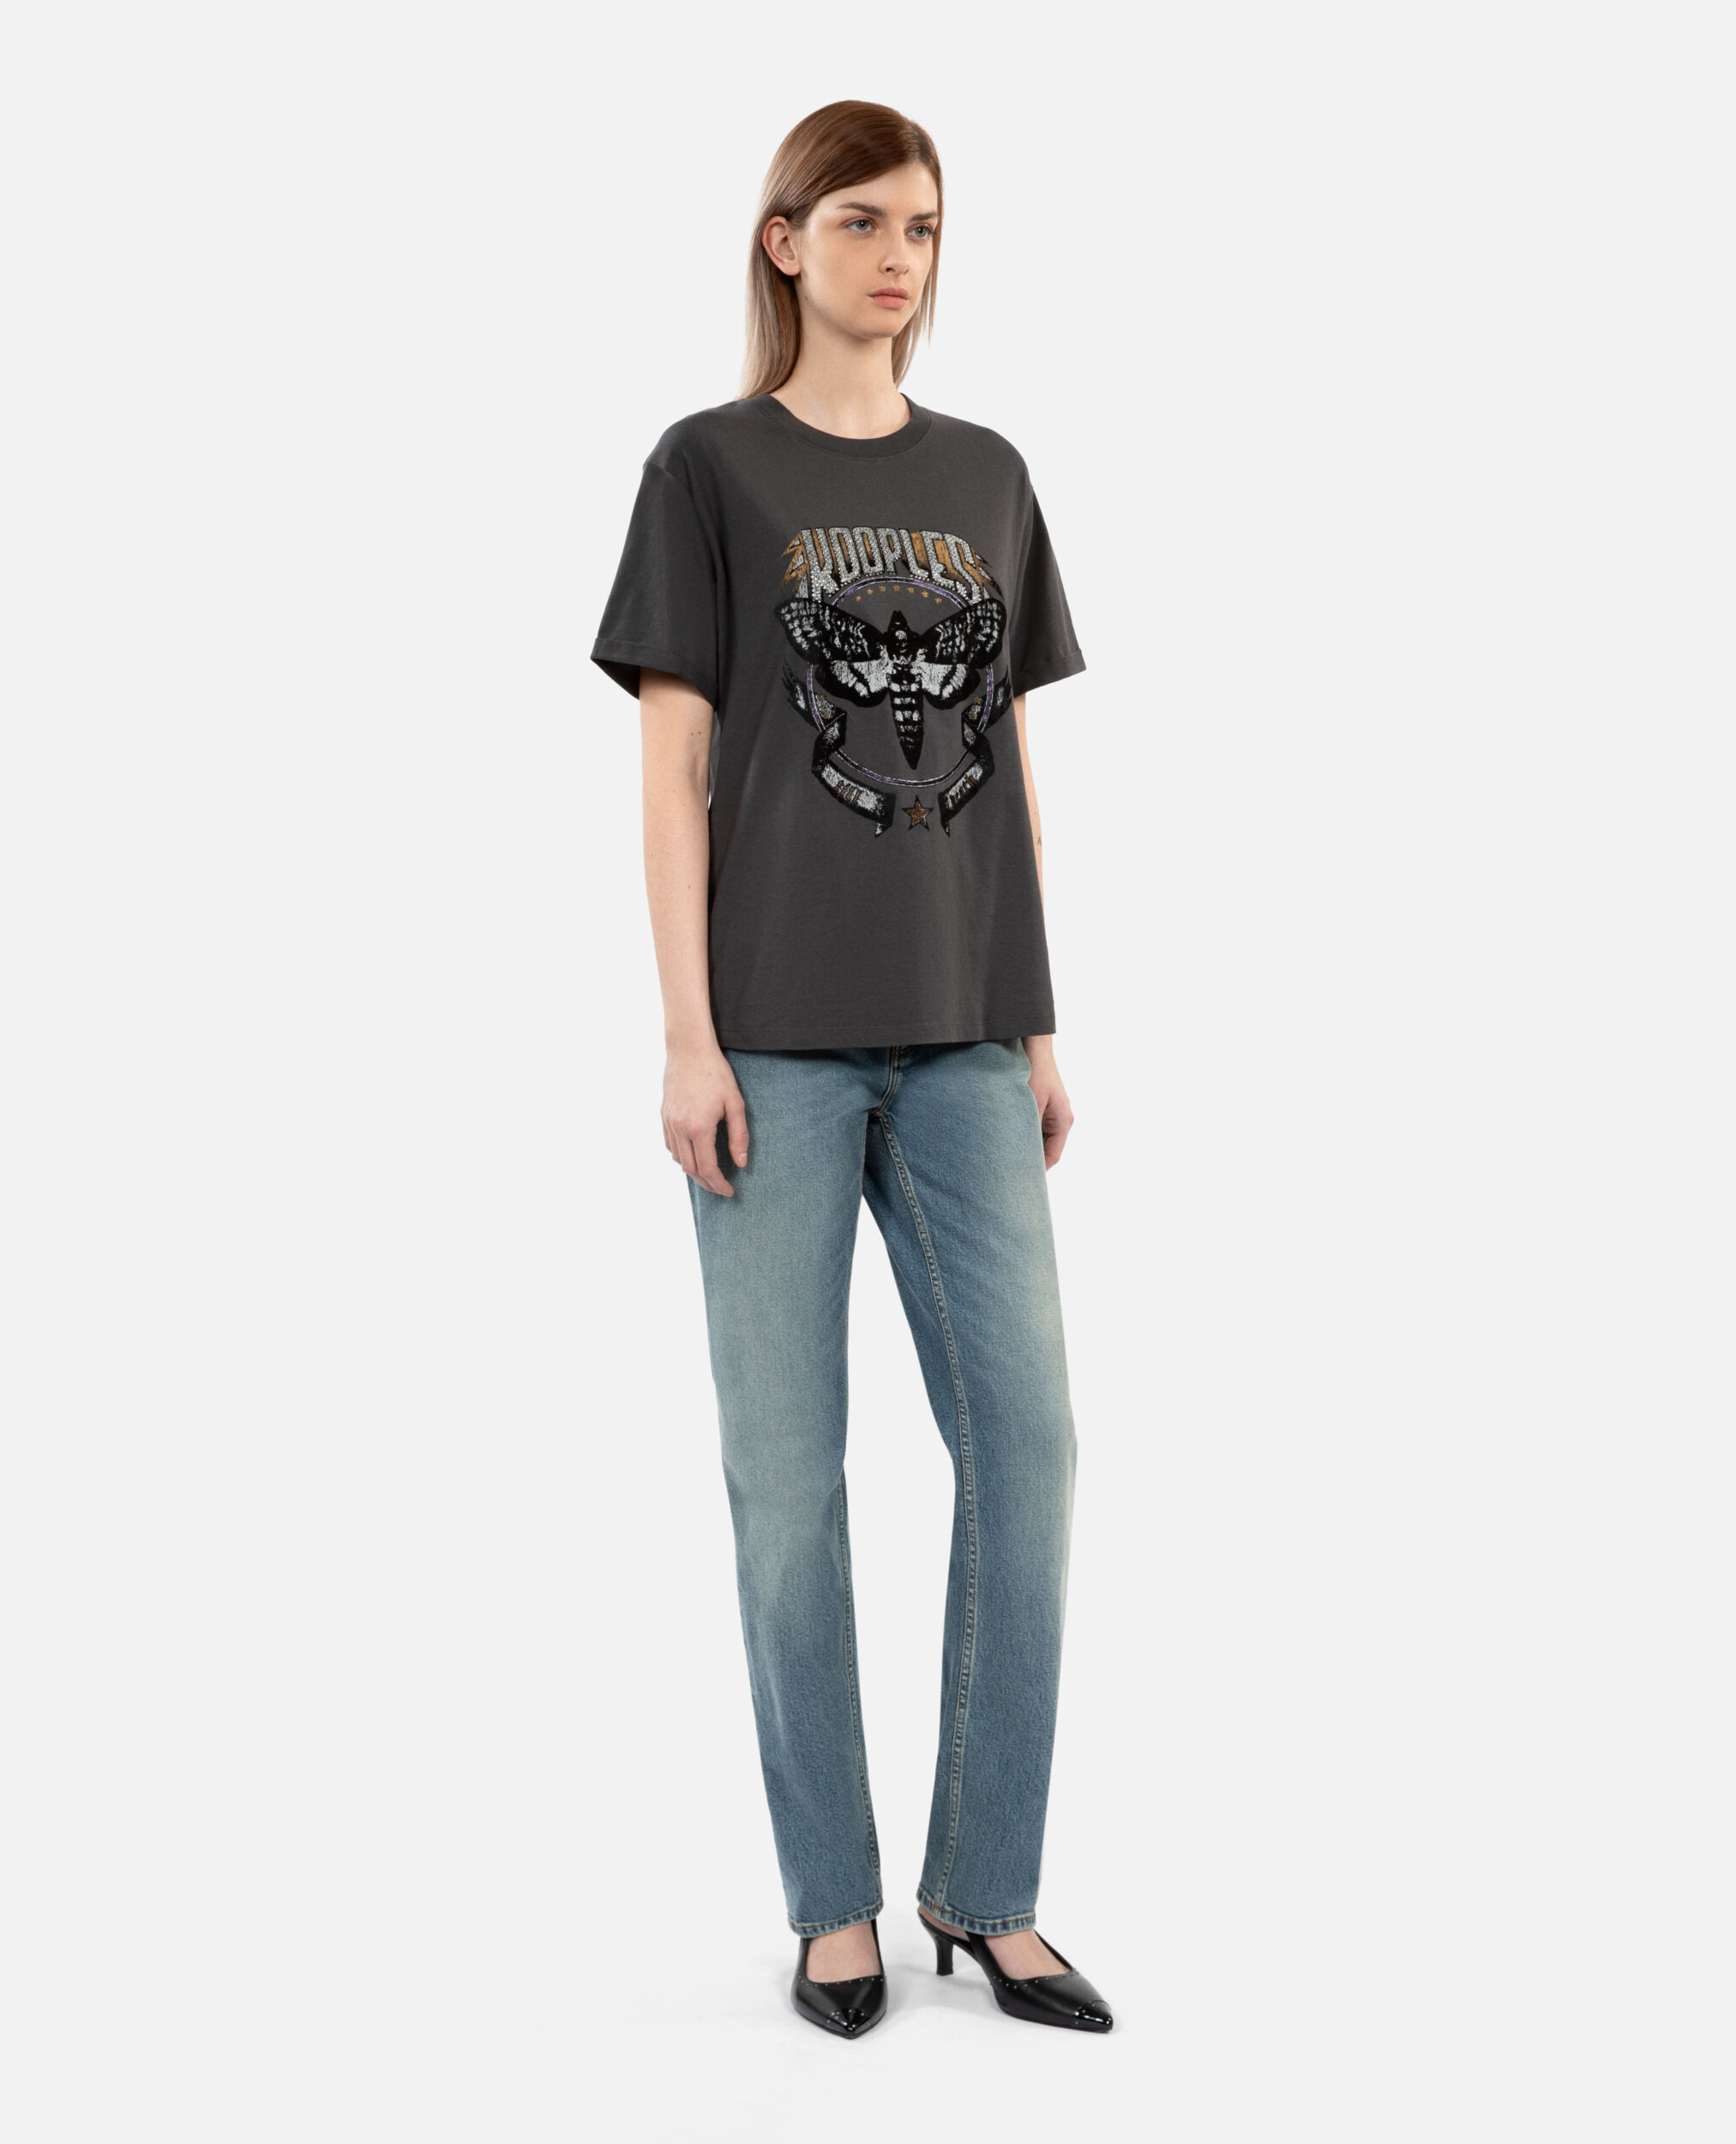 Carbongraues T-Shirt mit Siebdruck für Damen, CARBONE, hi-res image number null